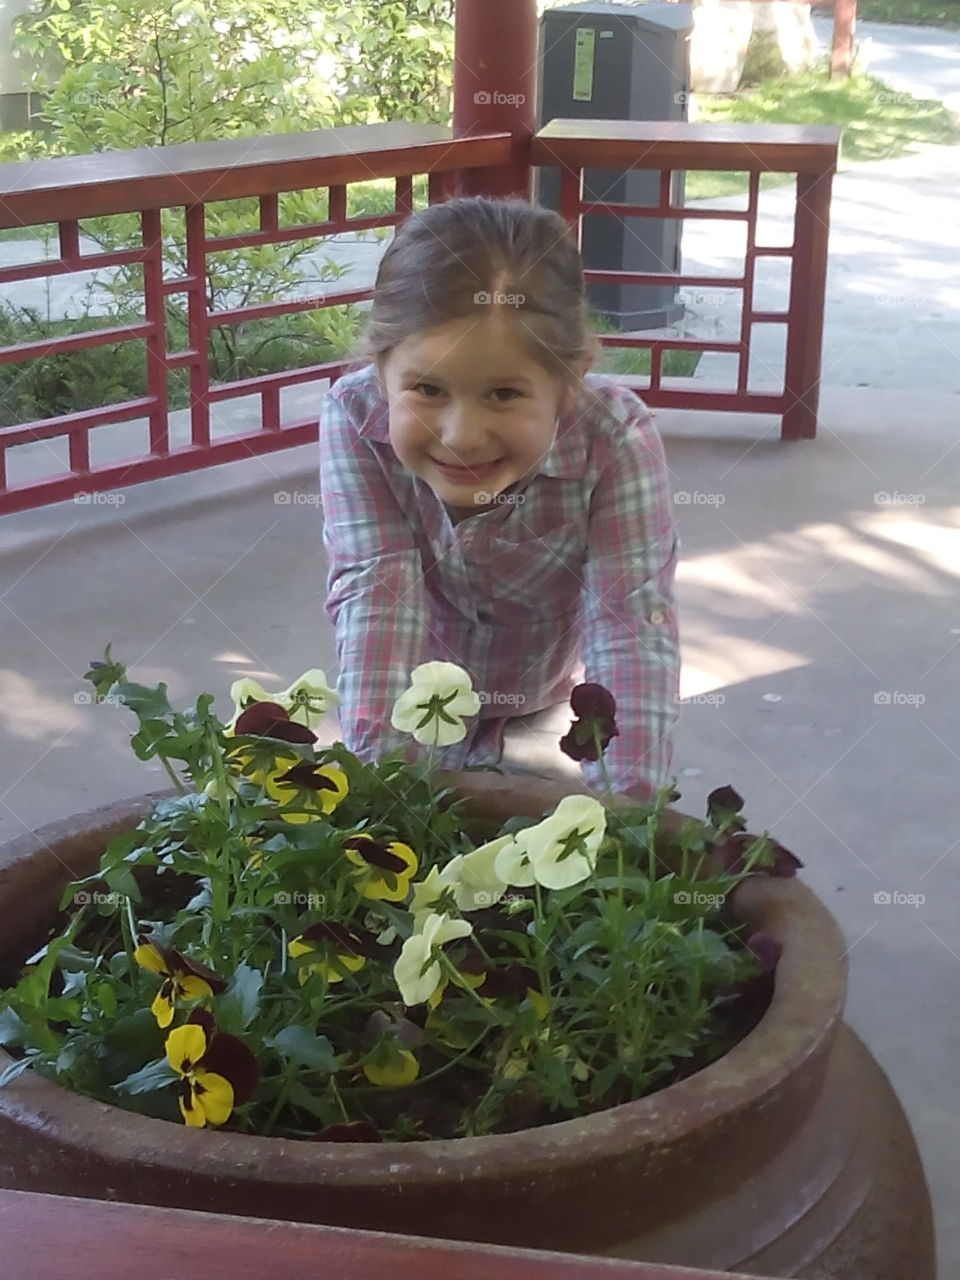 Child, Greenhouse, Food, Garden, Vegetable